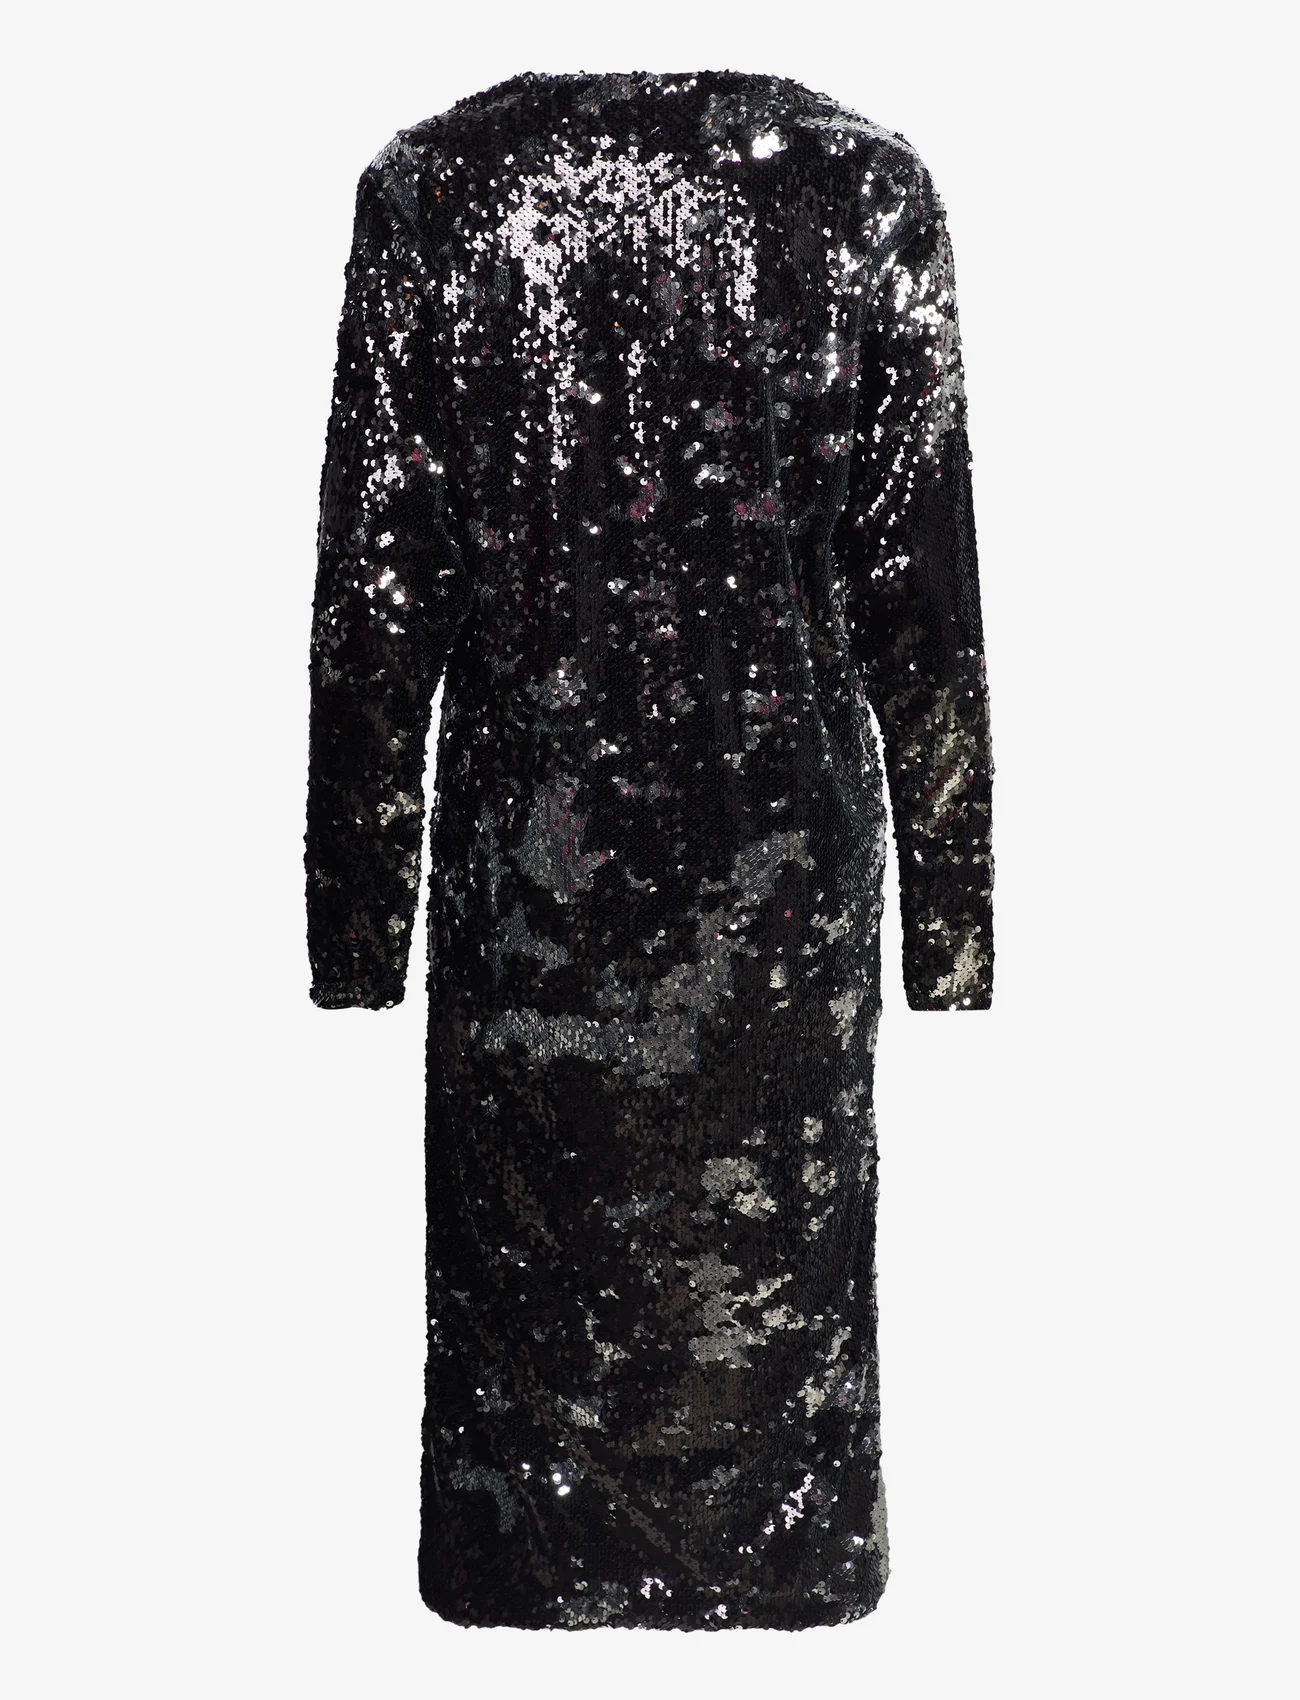 Mads Nørgaard - Neo Sequins Phalia Dress - ballīšu apģērbs par outlet cenām - black/silver - 1